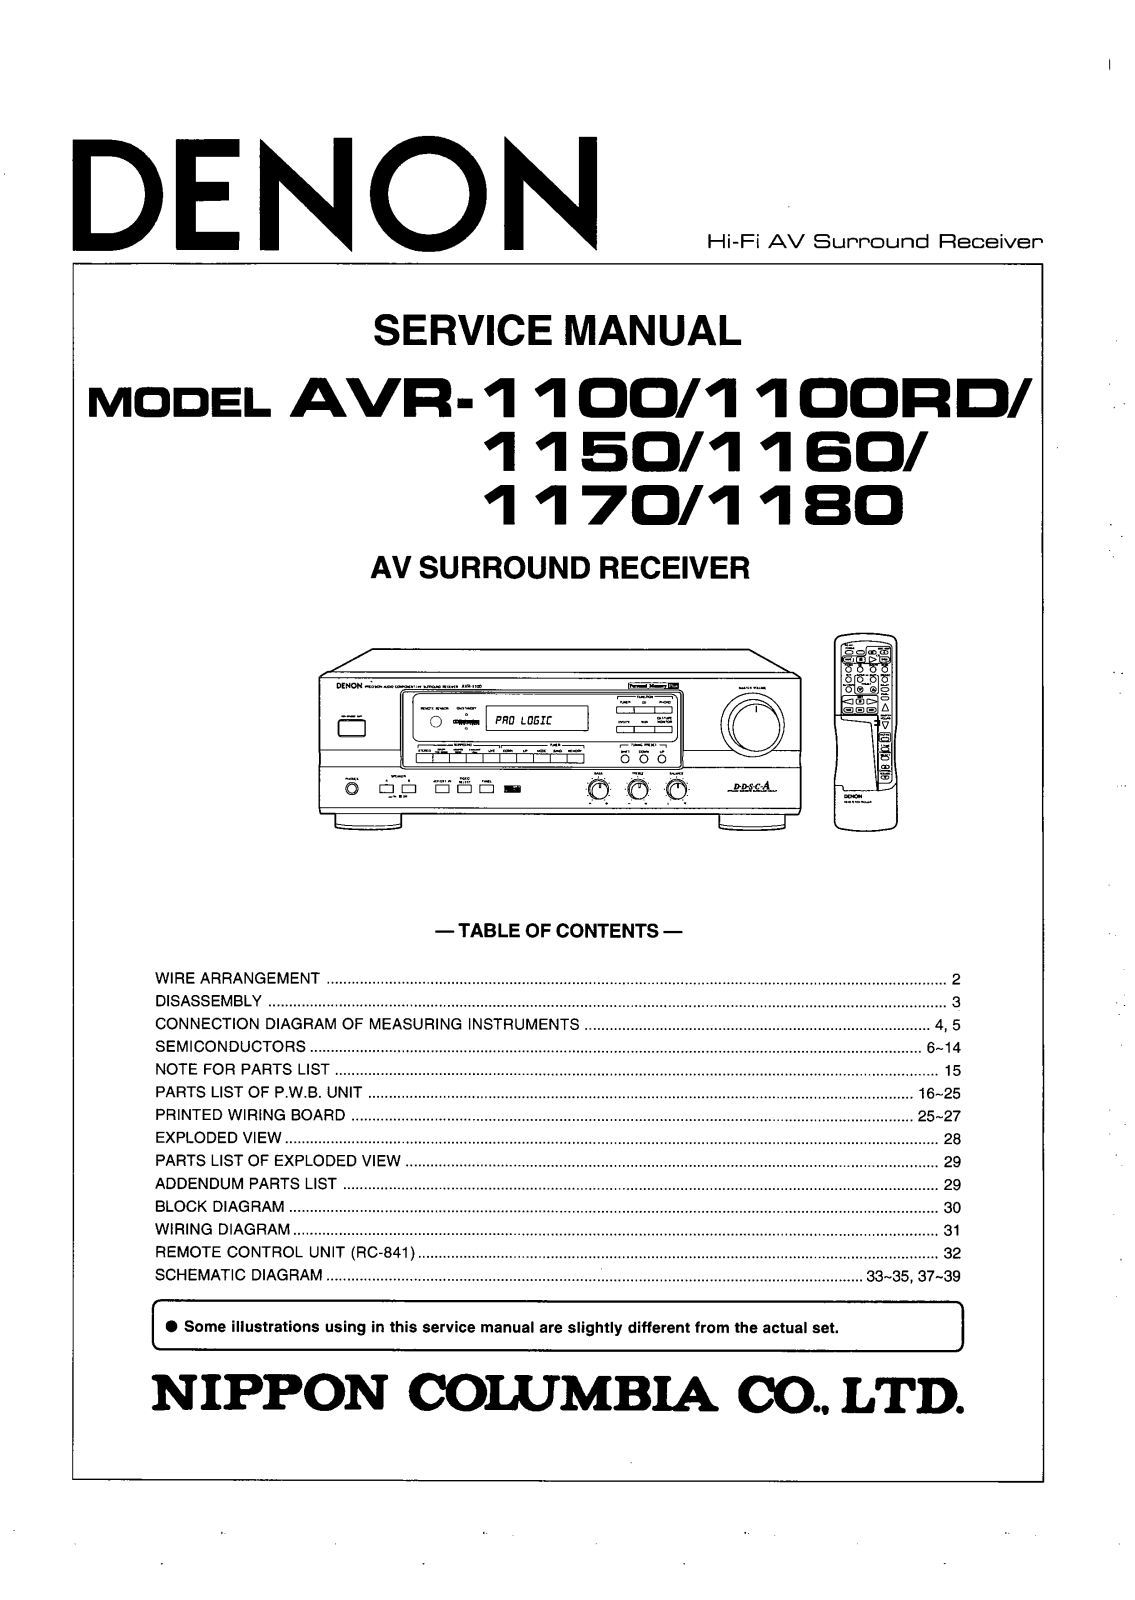 Denon AVR-1100, AVR-1100RD Service Manual